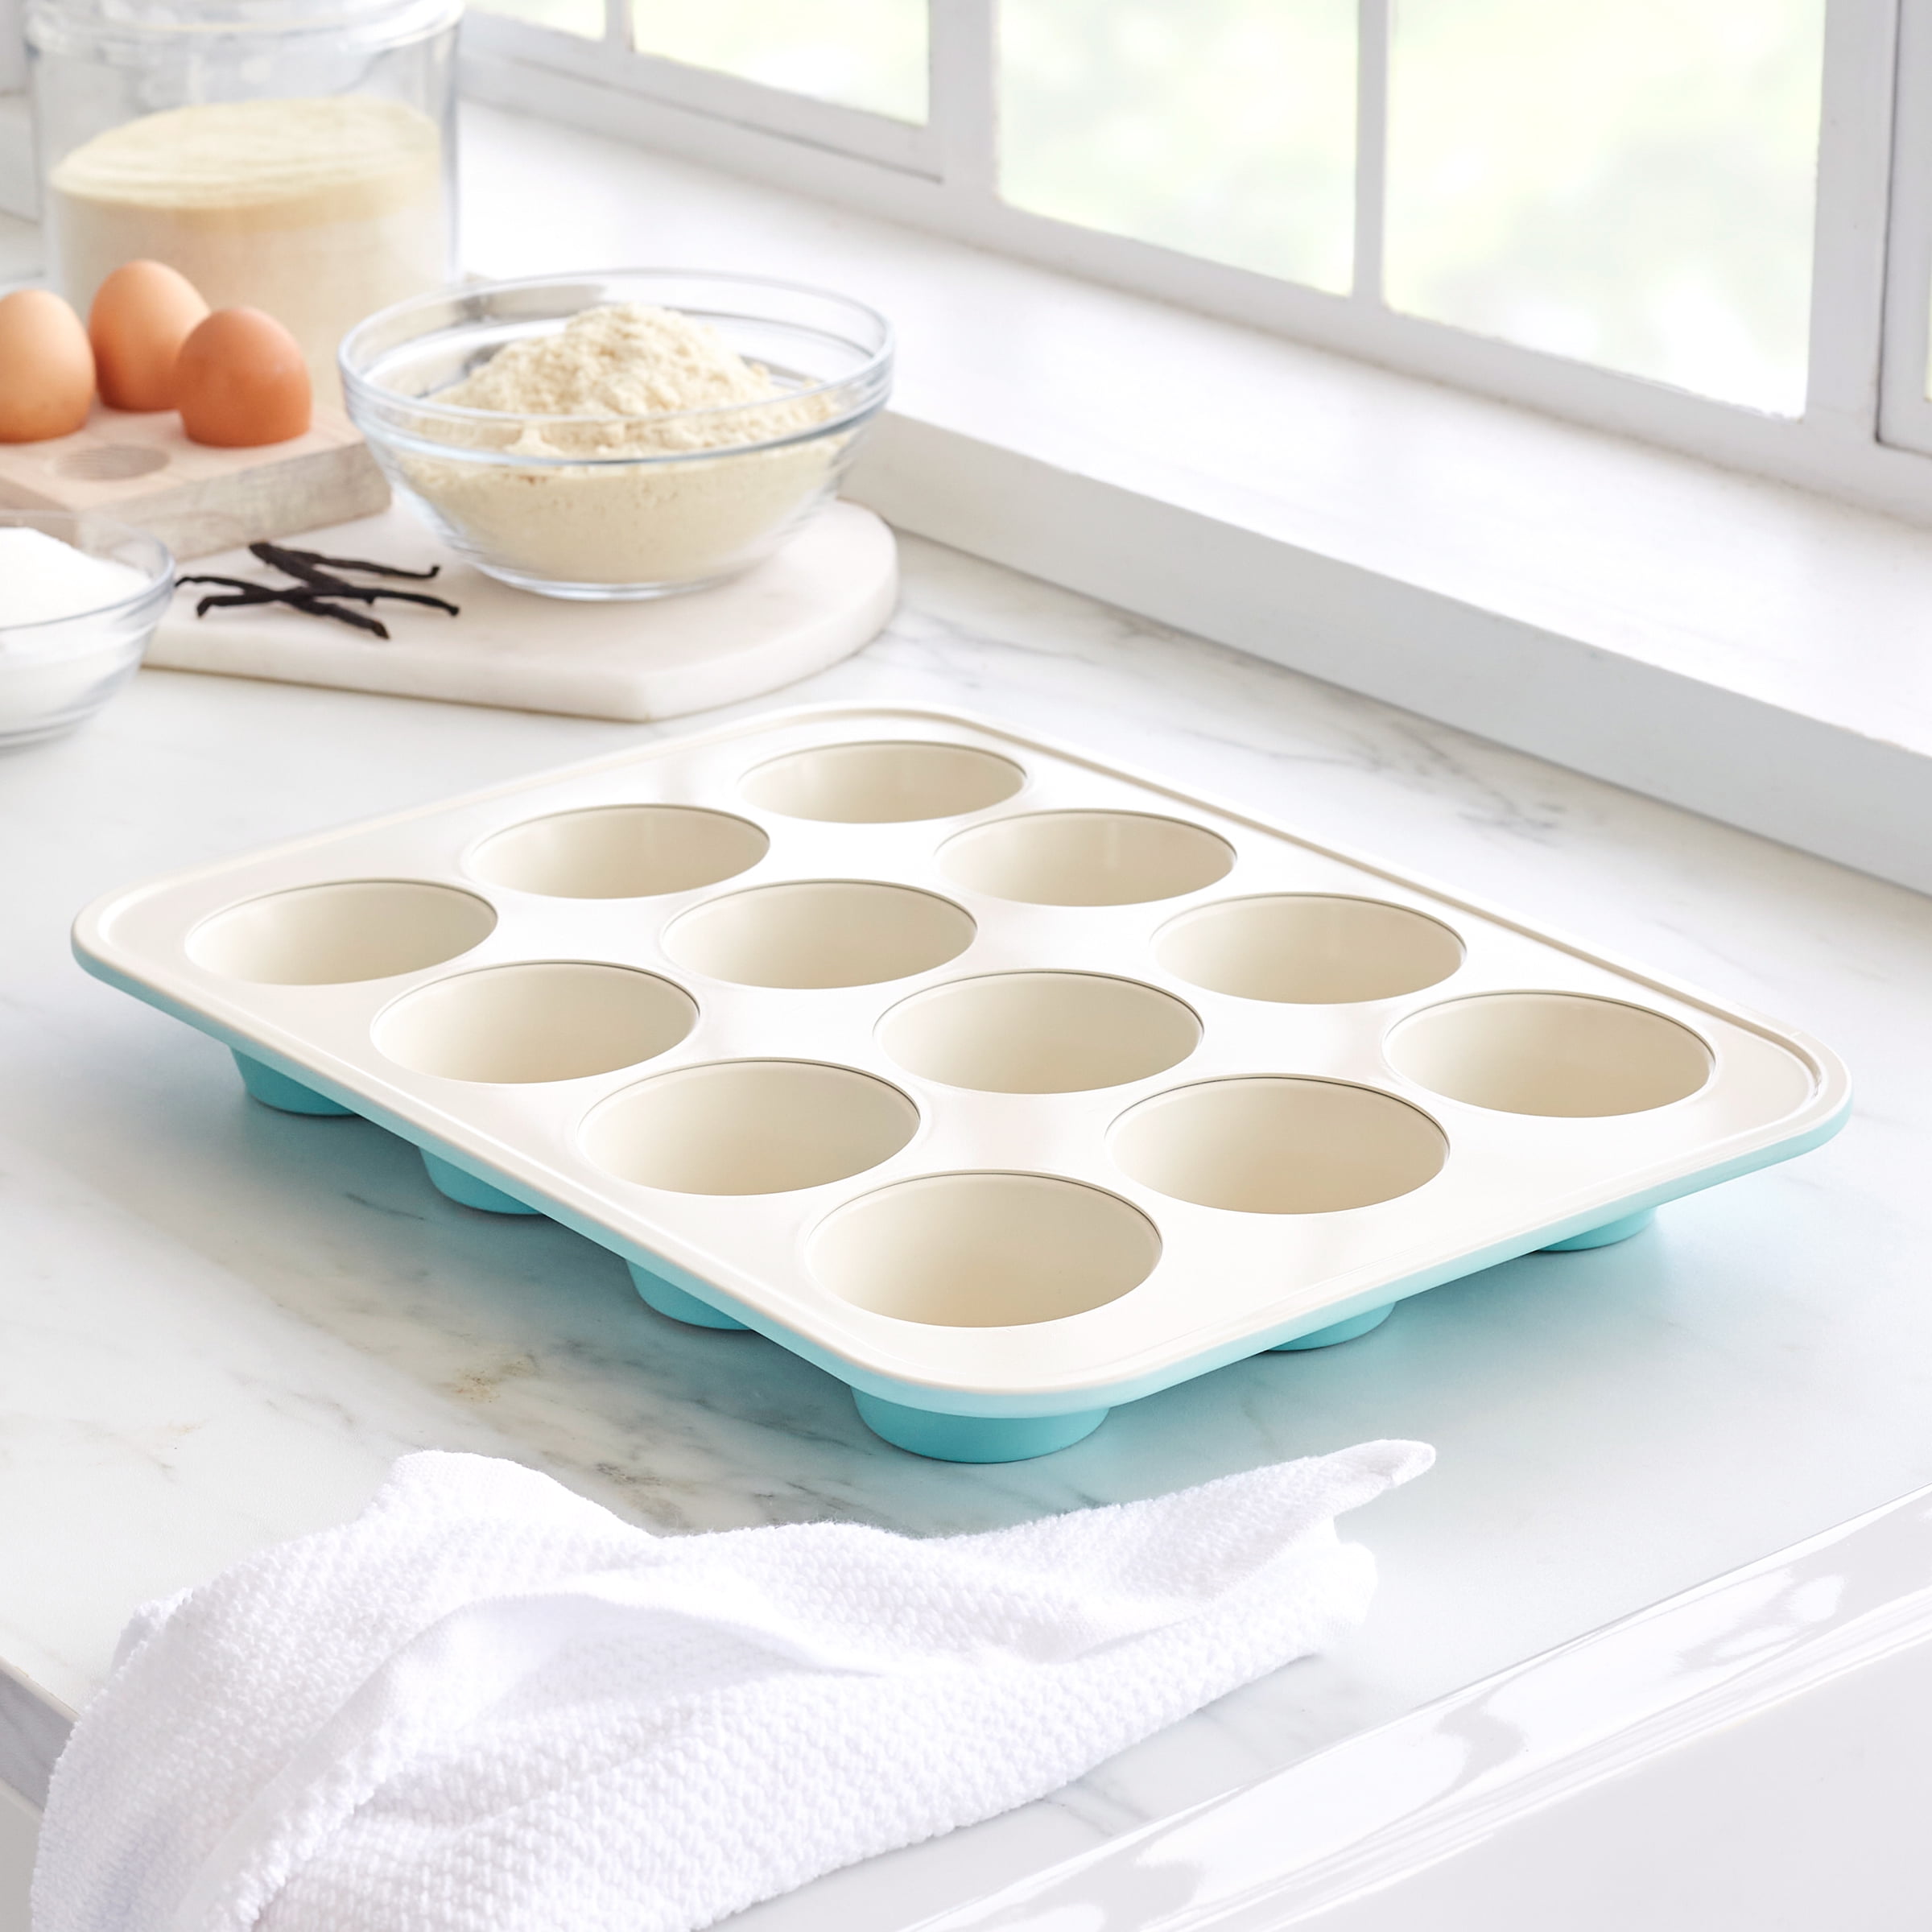 GreenLife Bakeware Healthy Ceramic Nonstick, 18 x 12 Half Cookie Sheet Baking Pan, PFAS-Free, Pink